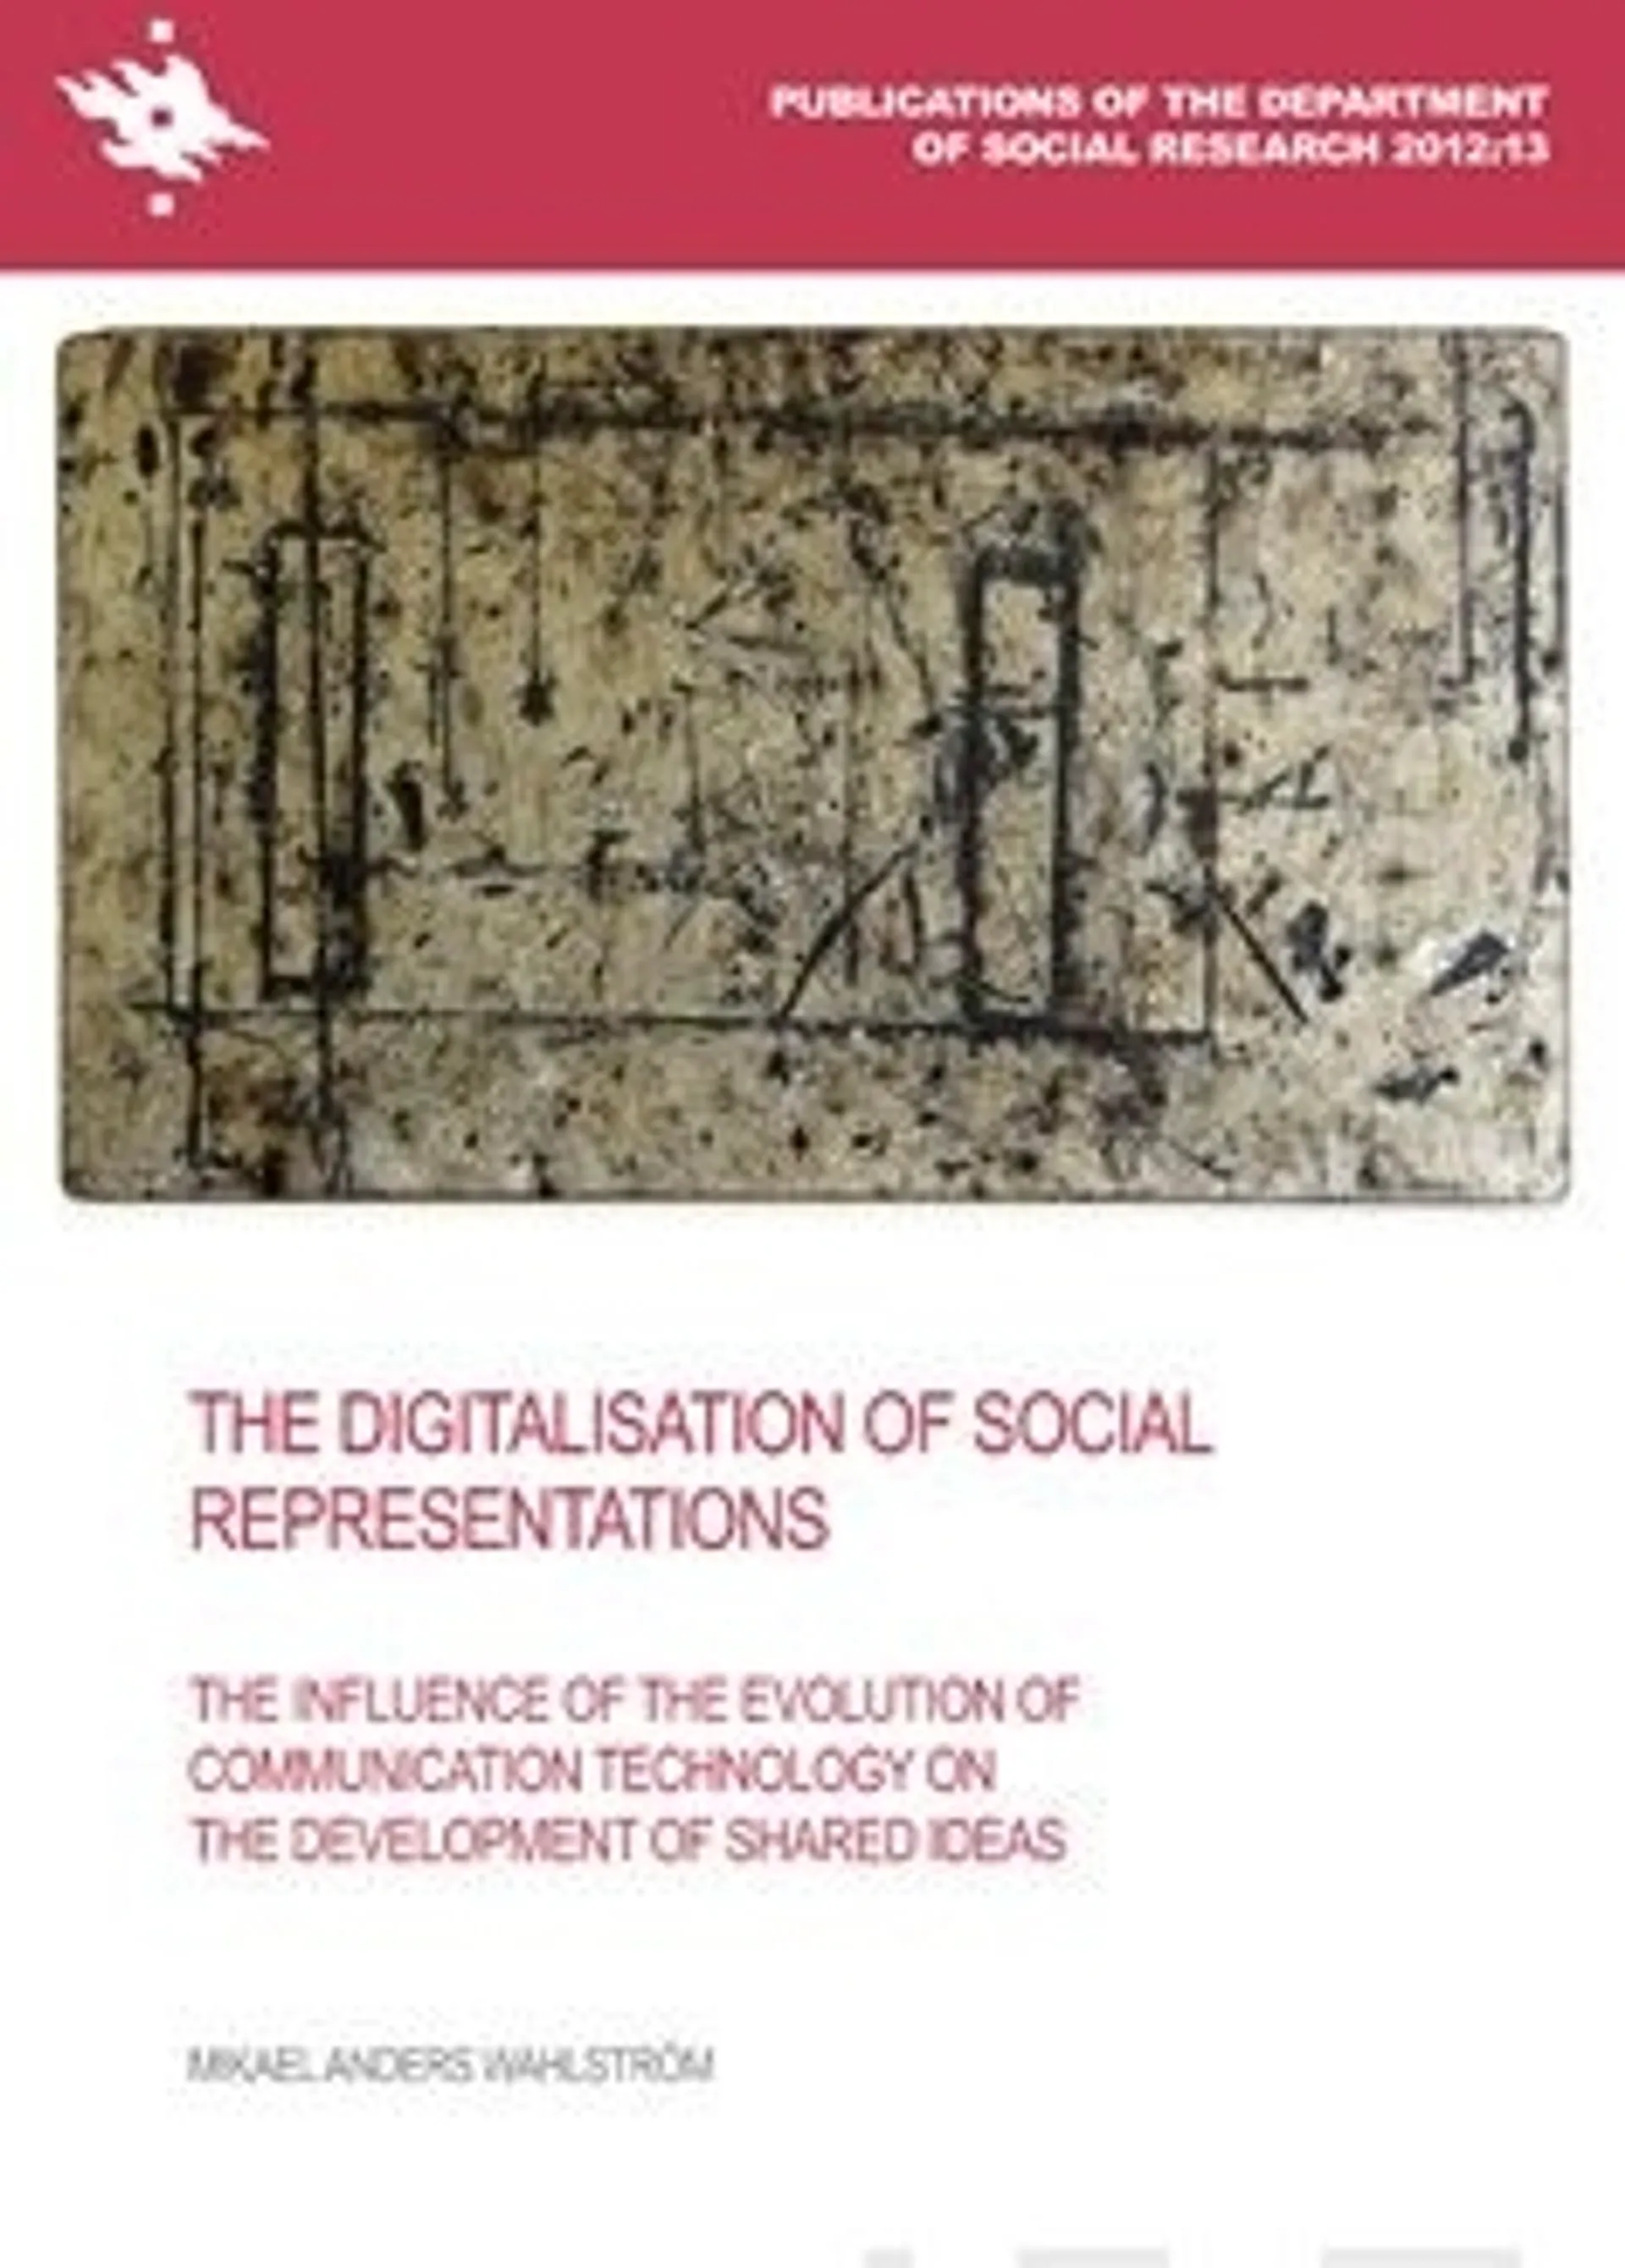 Wahlström, The Digilisation of Social Representations